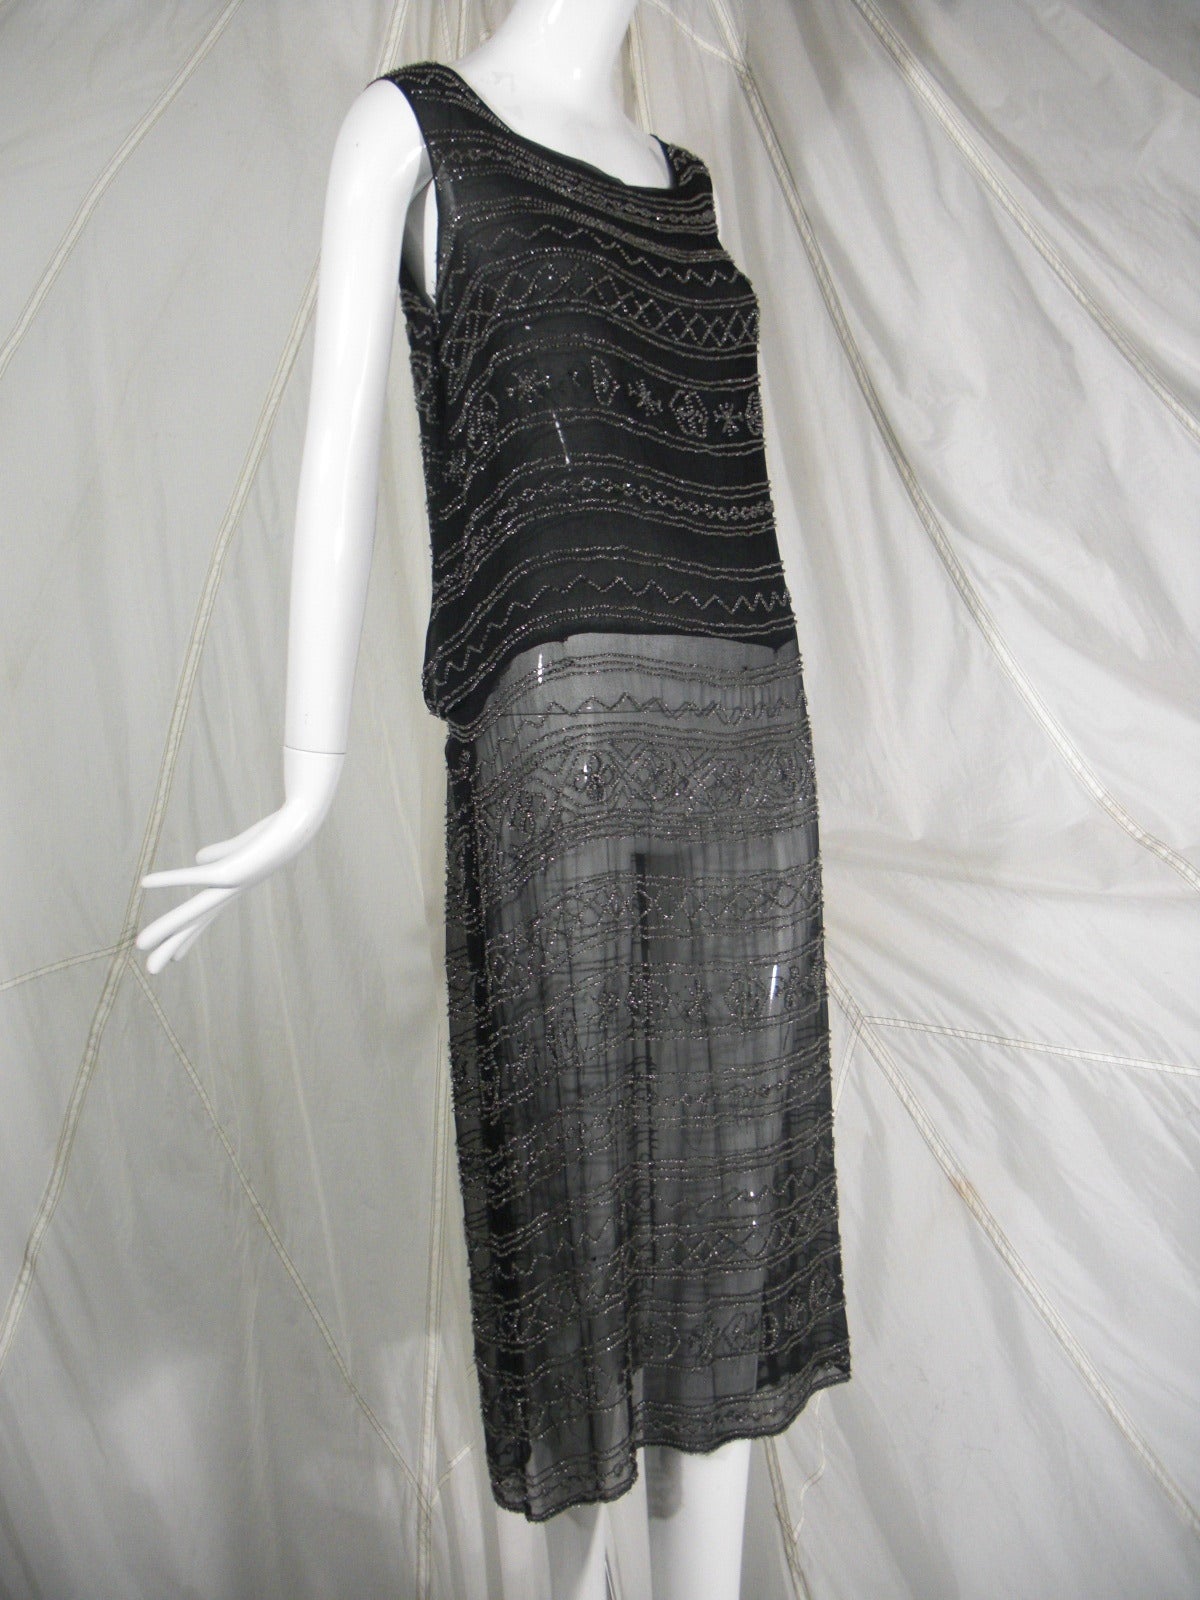 Women's 1920s Black Silk Flapper Dress with Elaborate Beading